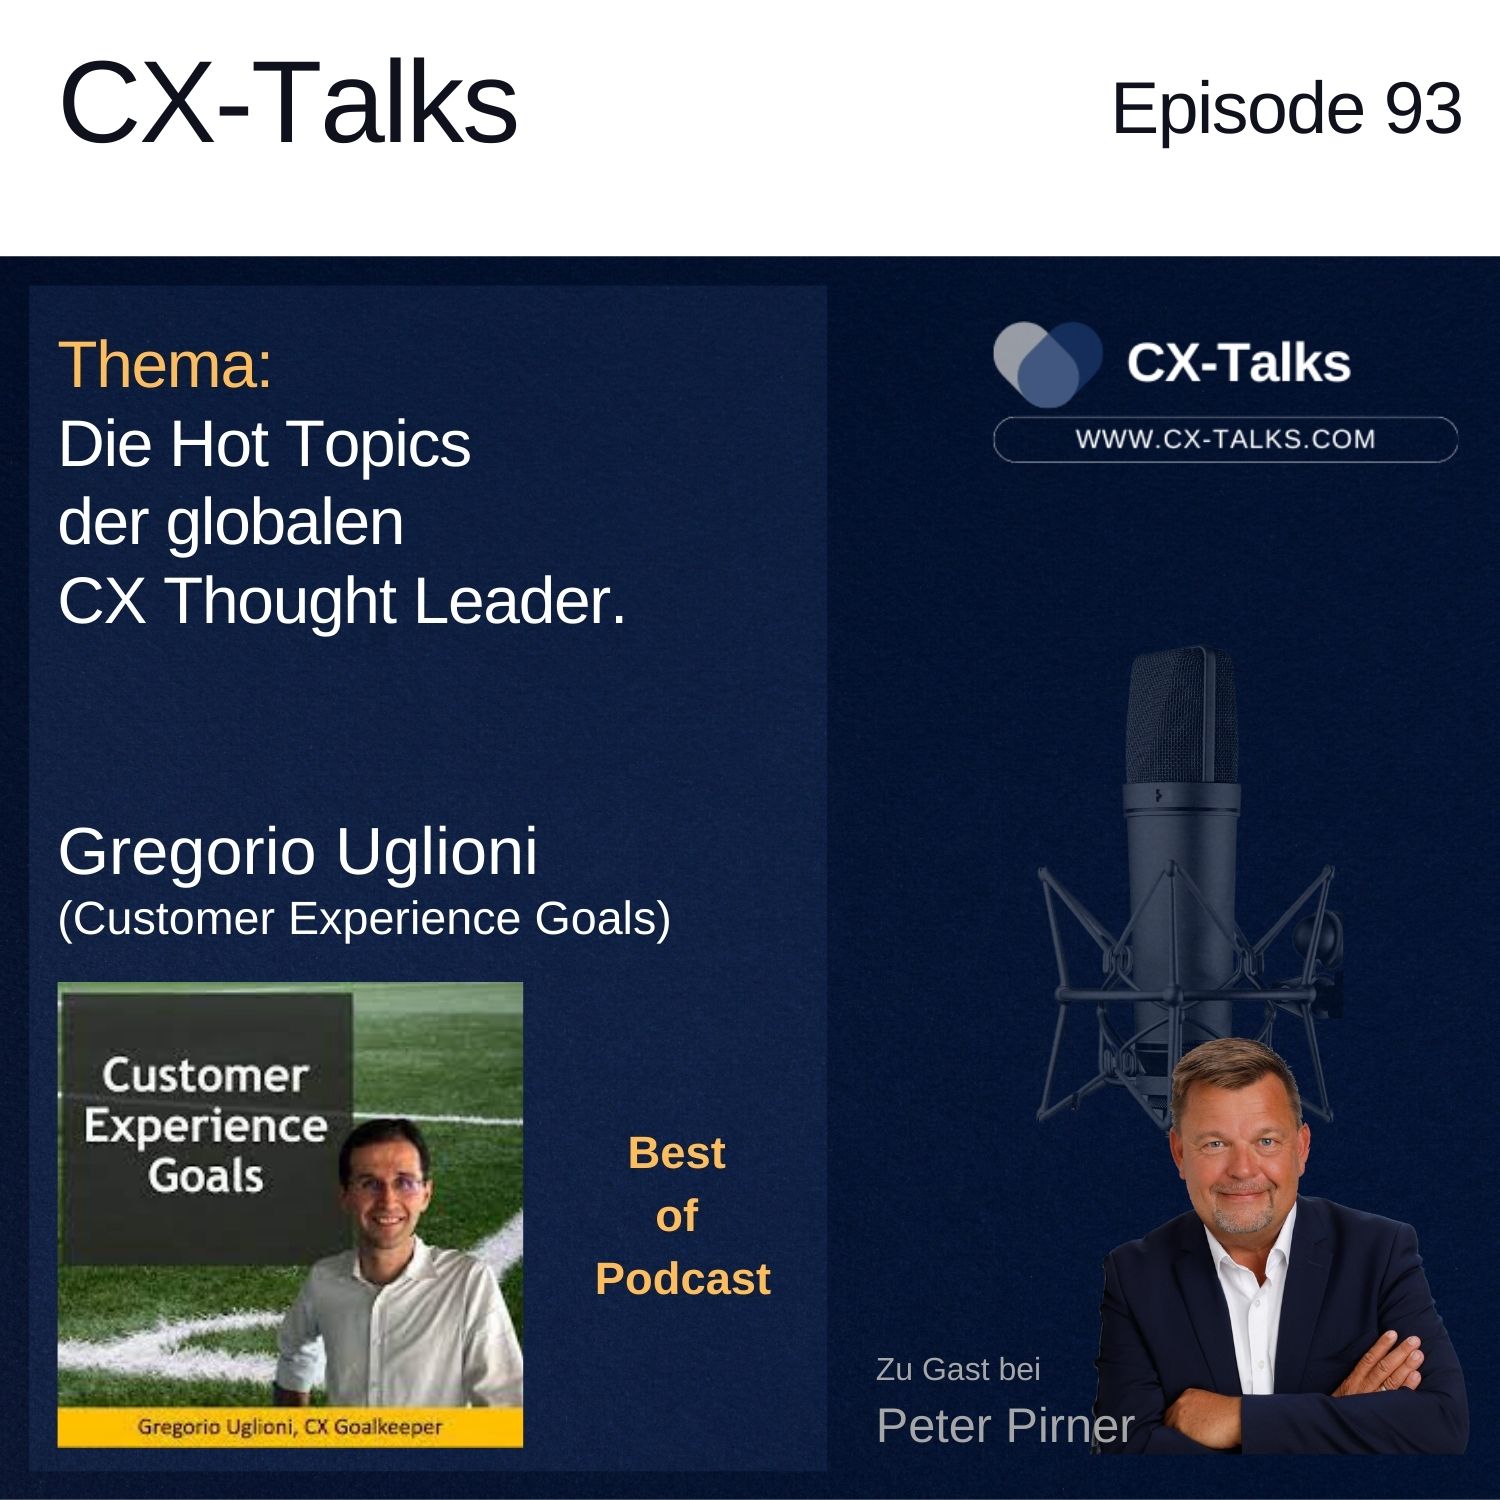 #93 Die Hot Topics der globalen CX Thought Leader. Gregorio Uglioni bei Peter Pirner